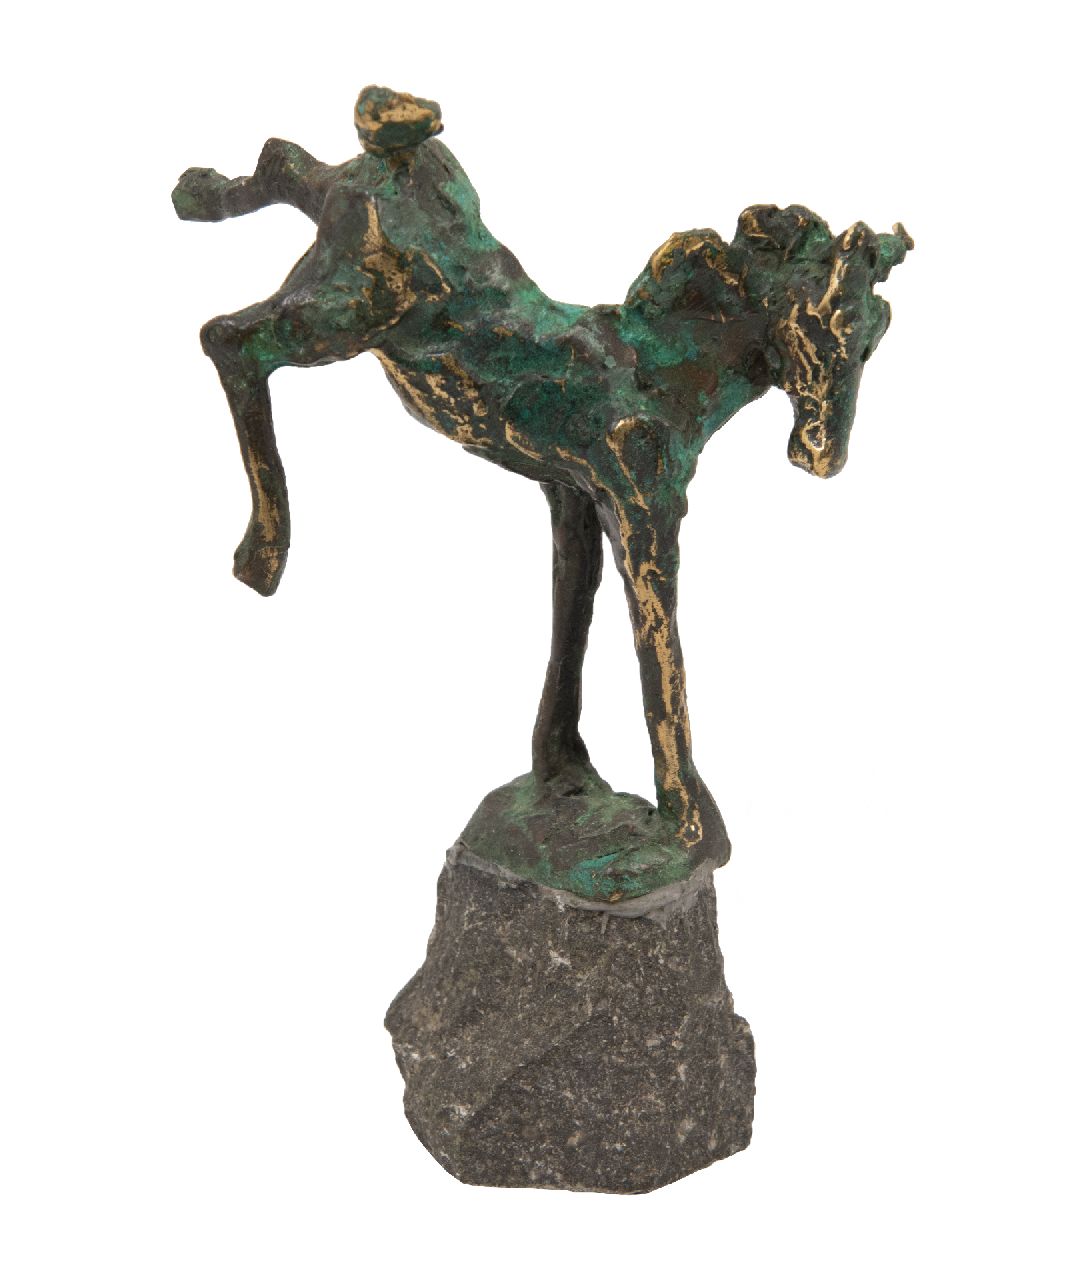 Bakker W.F.  | Willem Frederik 'Jits' Bakker | Sculptures and objects offered for sale | Frolicking foal, bronze 11.5 x 7.6 cm, signed on the base